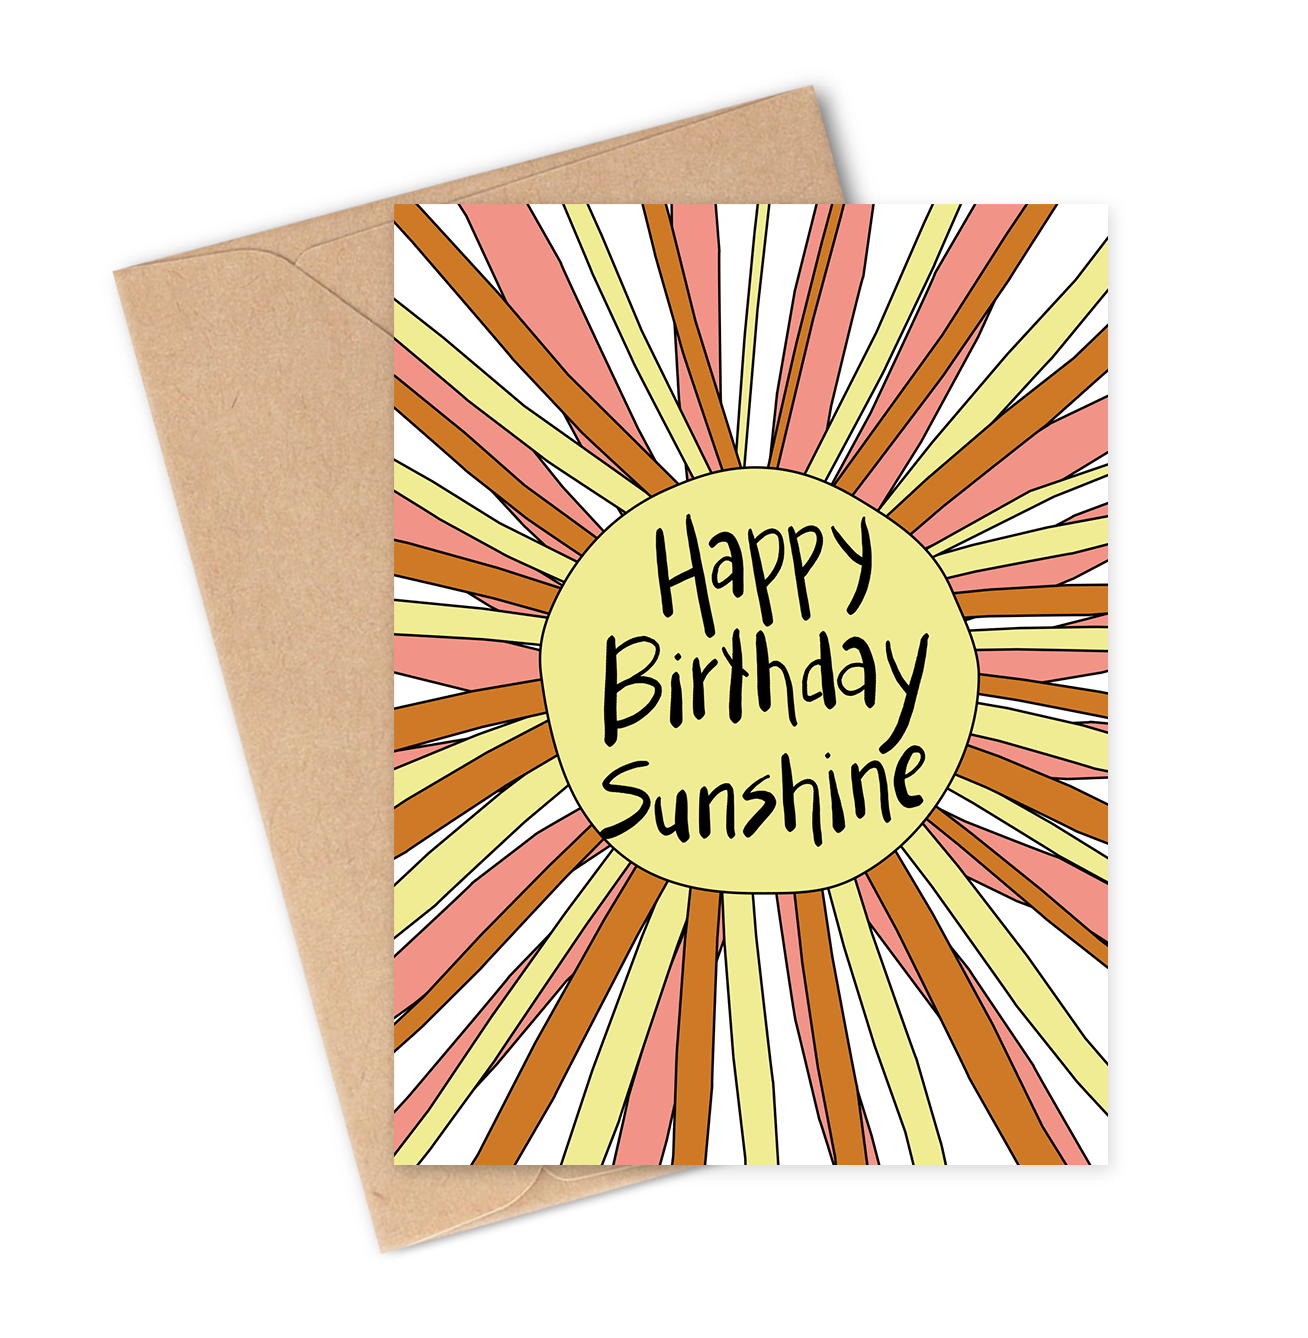 Happy birthday sunshine greeting card with kraft envelope 